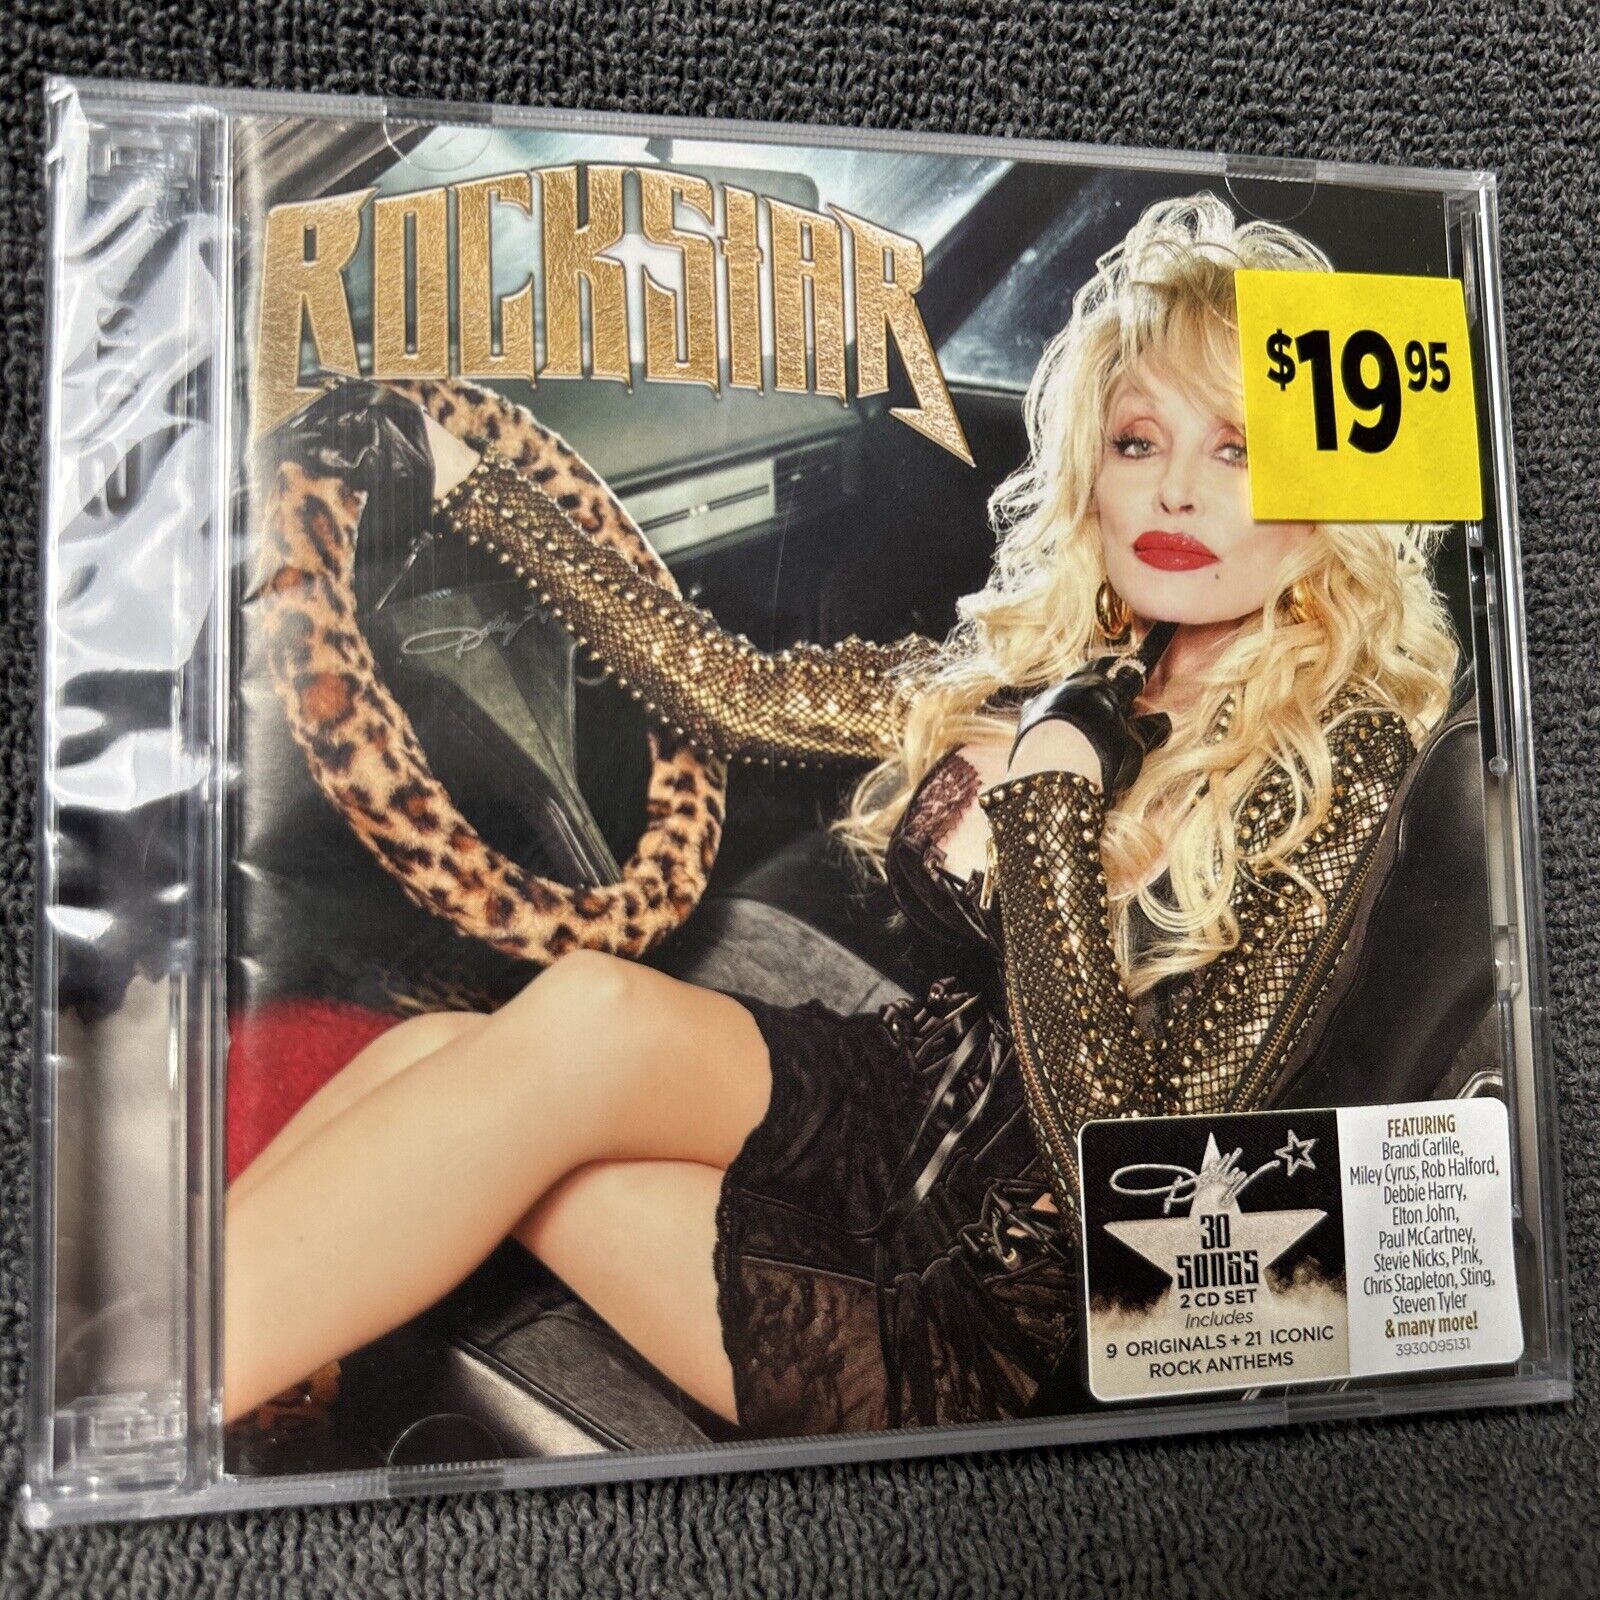 Dolly Parton ROCKSTAR 2 CD Set with 30 Tracks ~ Brand New, Sealed